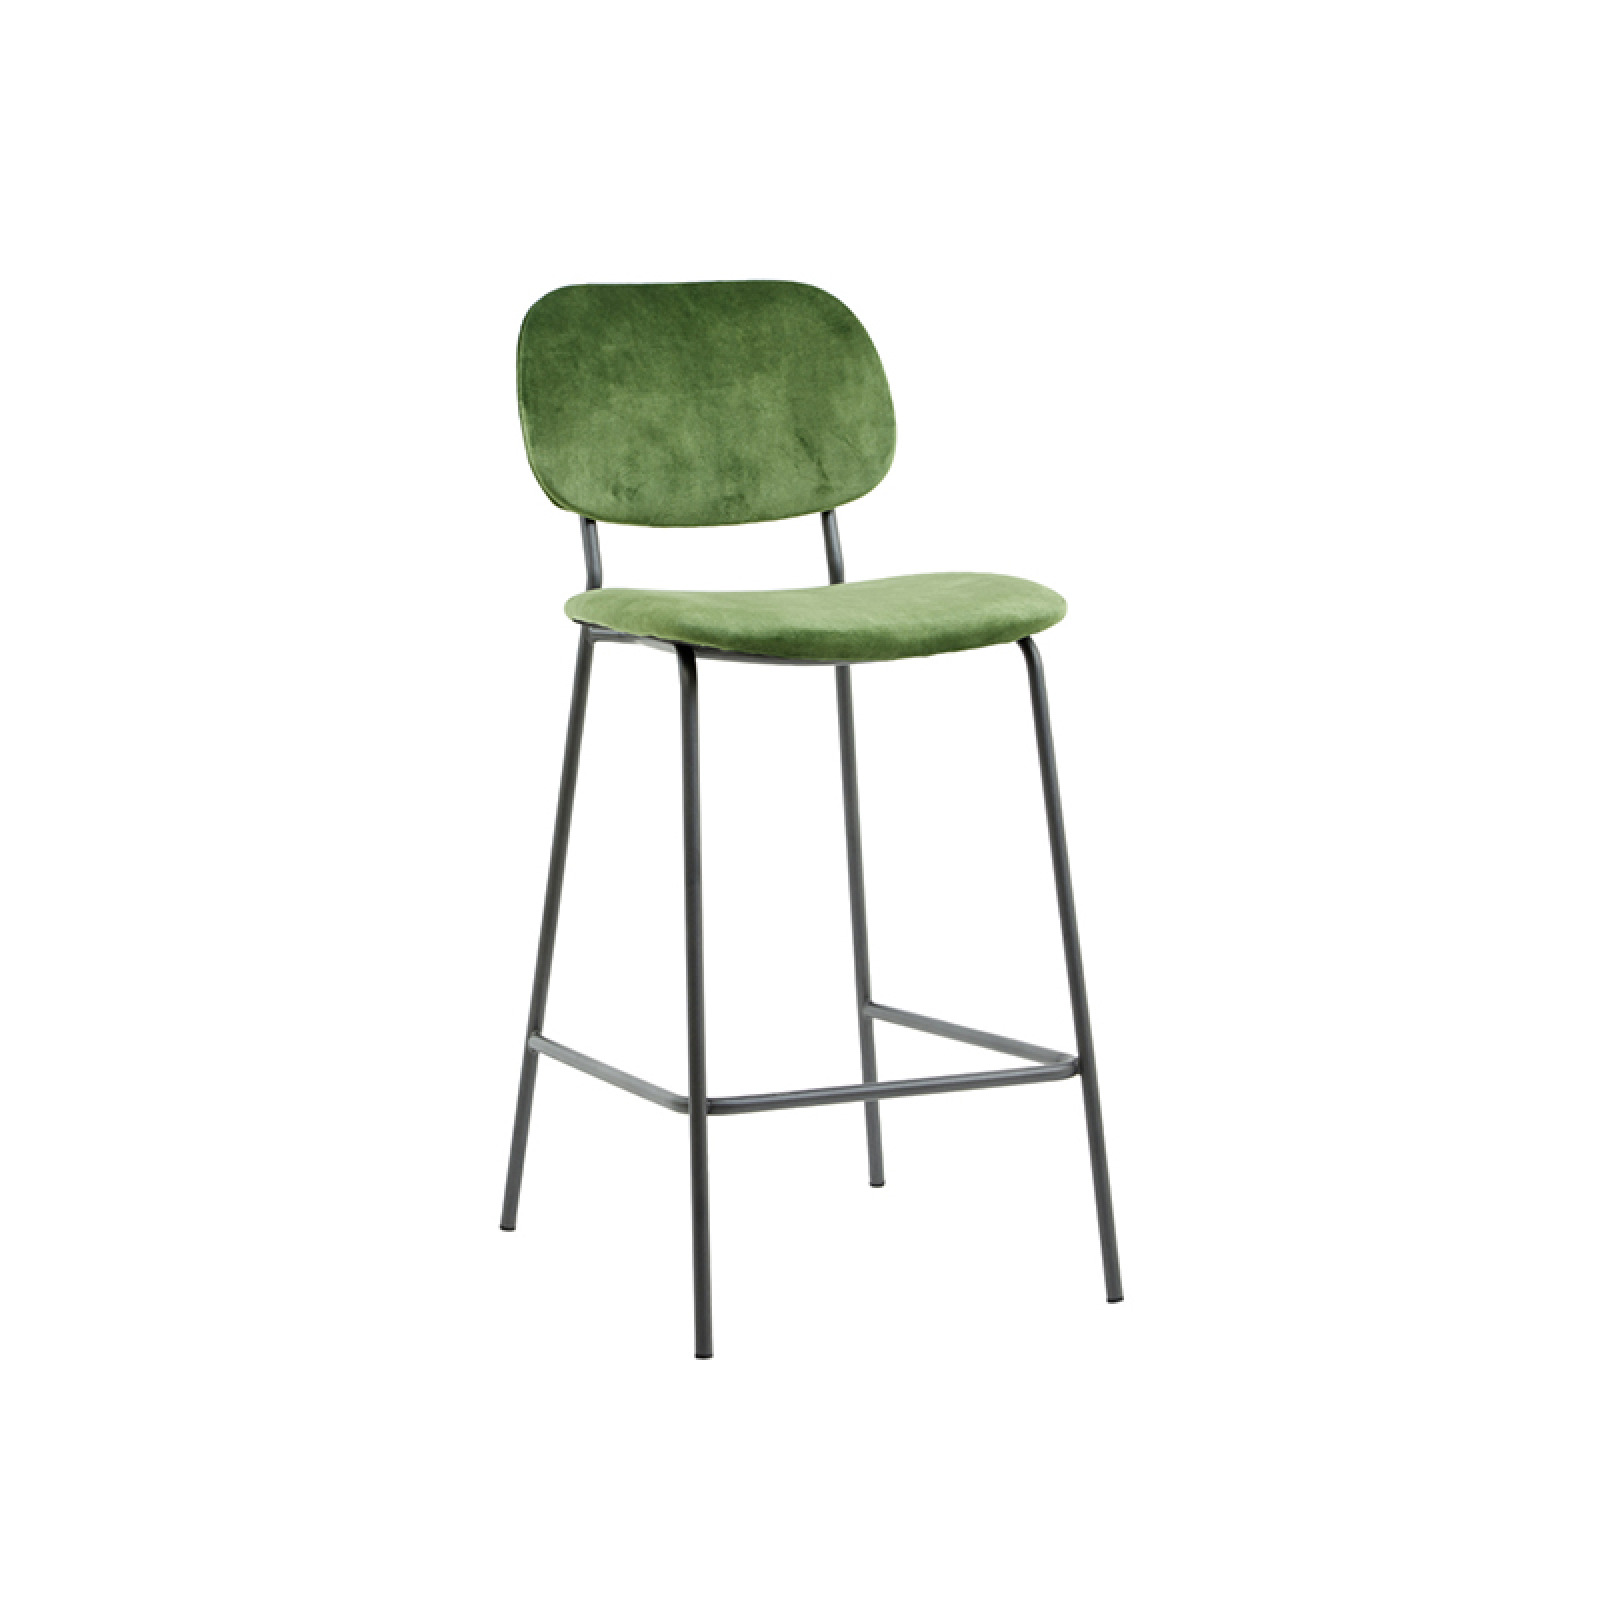 Emma green bar chair